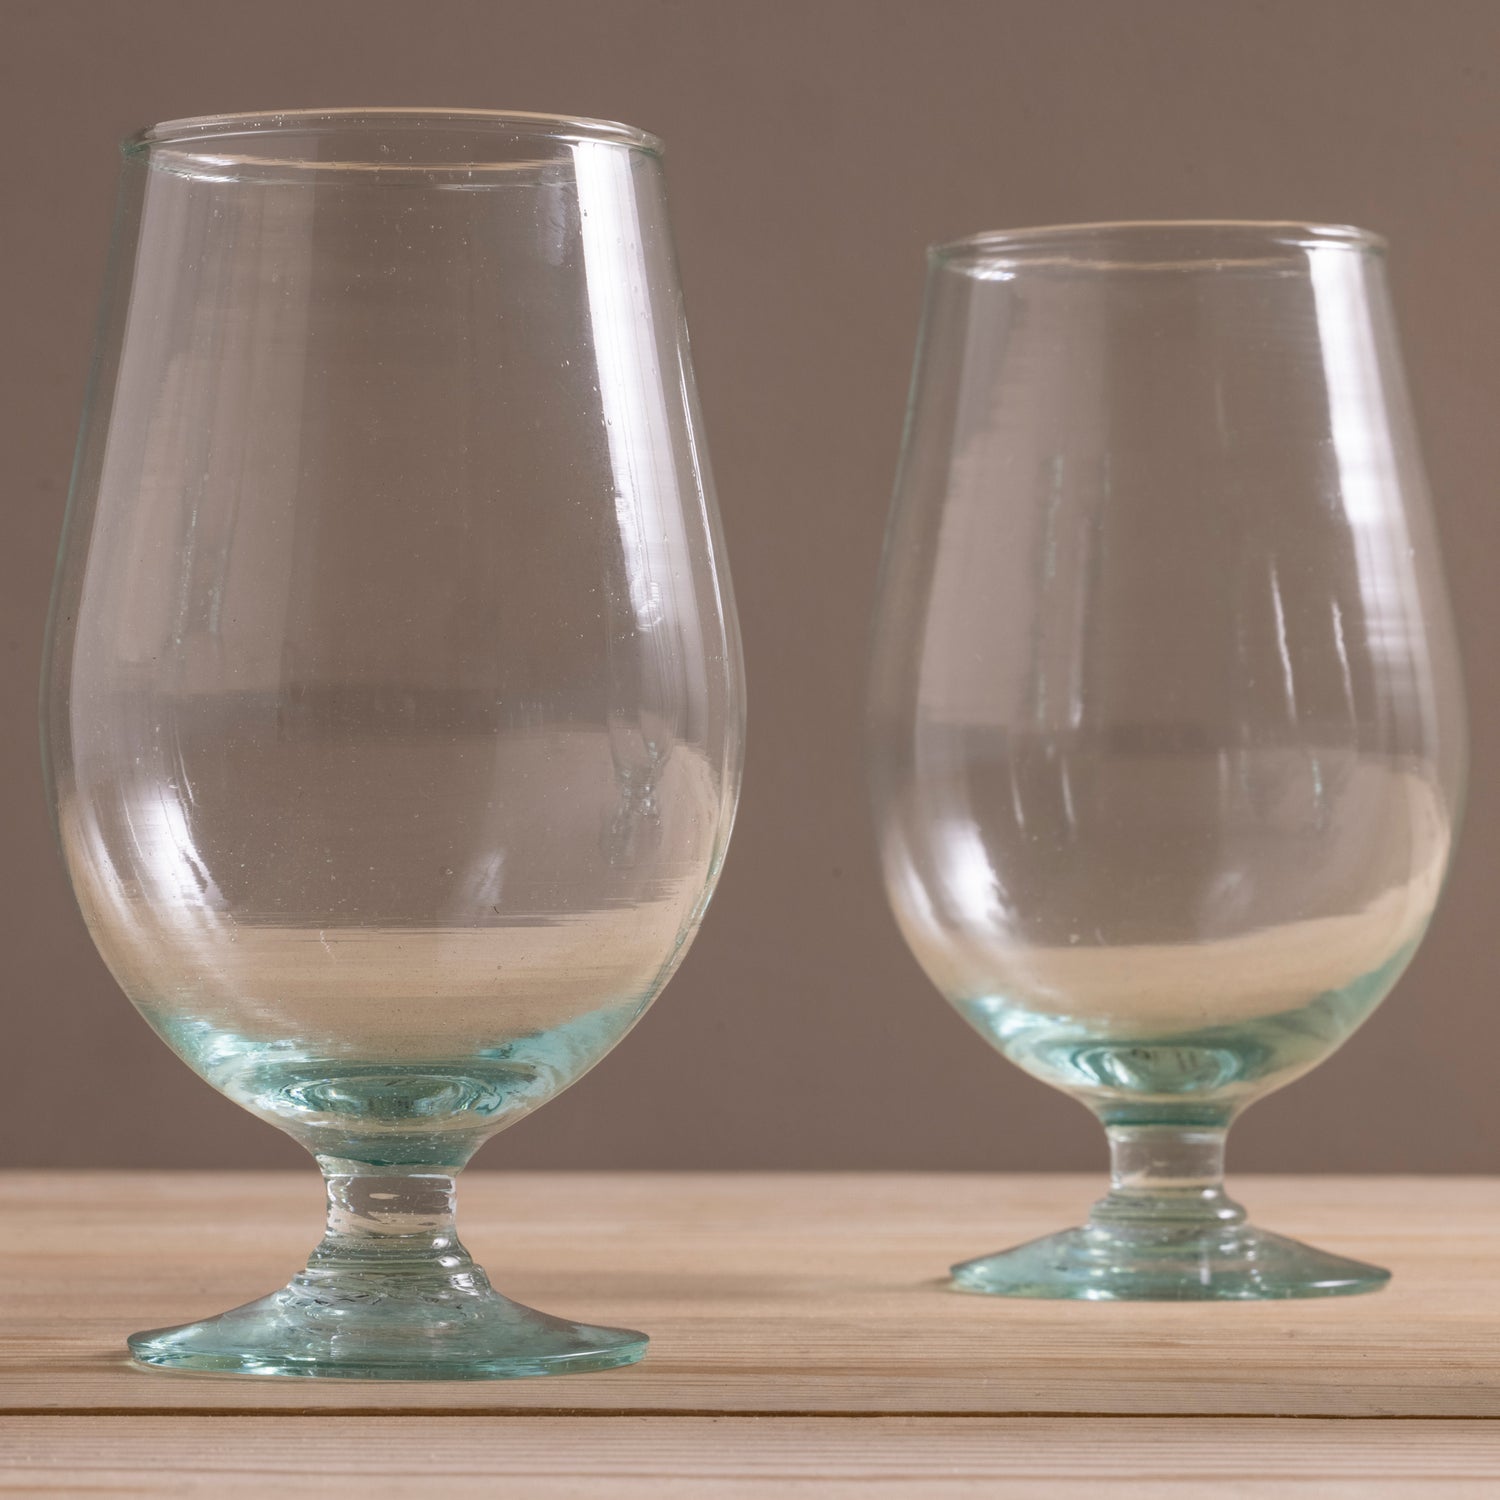 Premium Recycled Tulip Glass, Set of 4